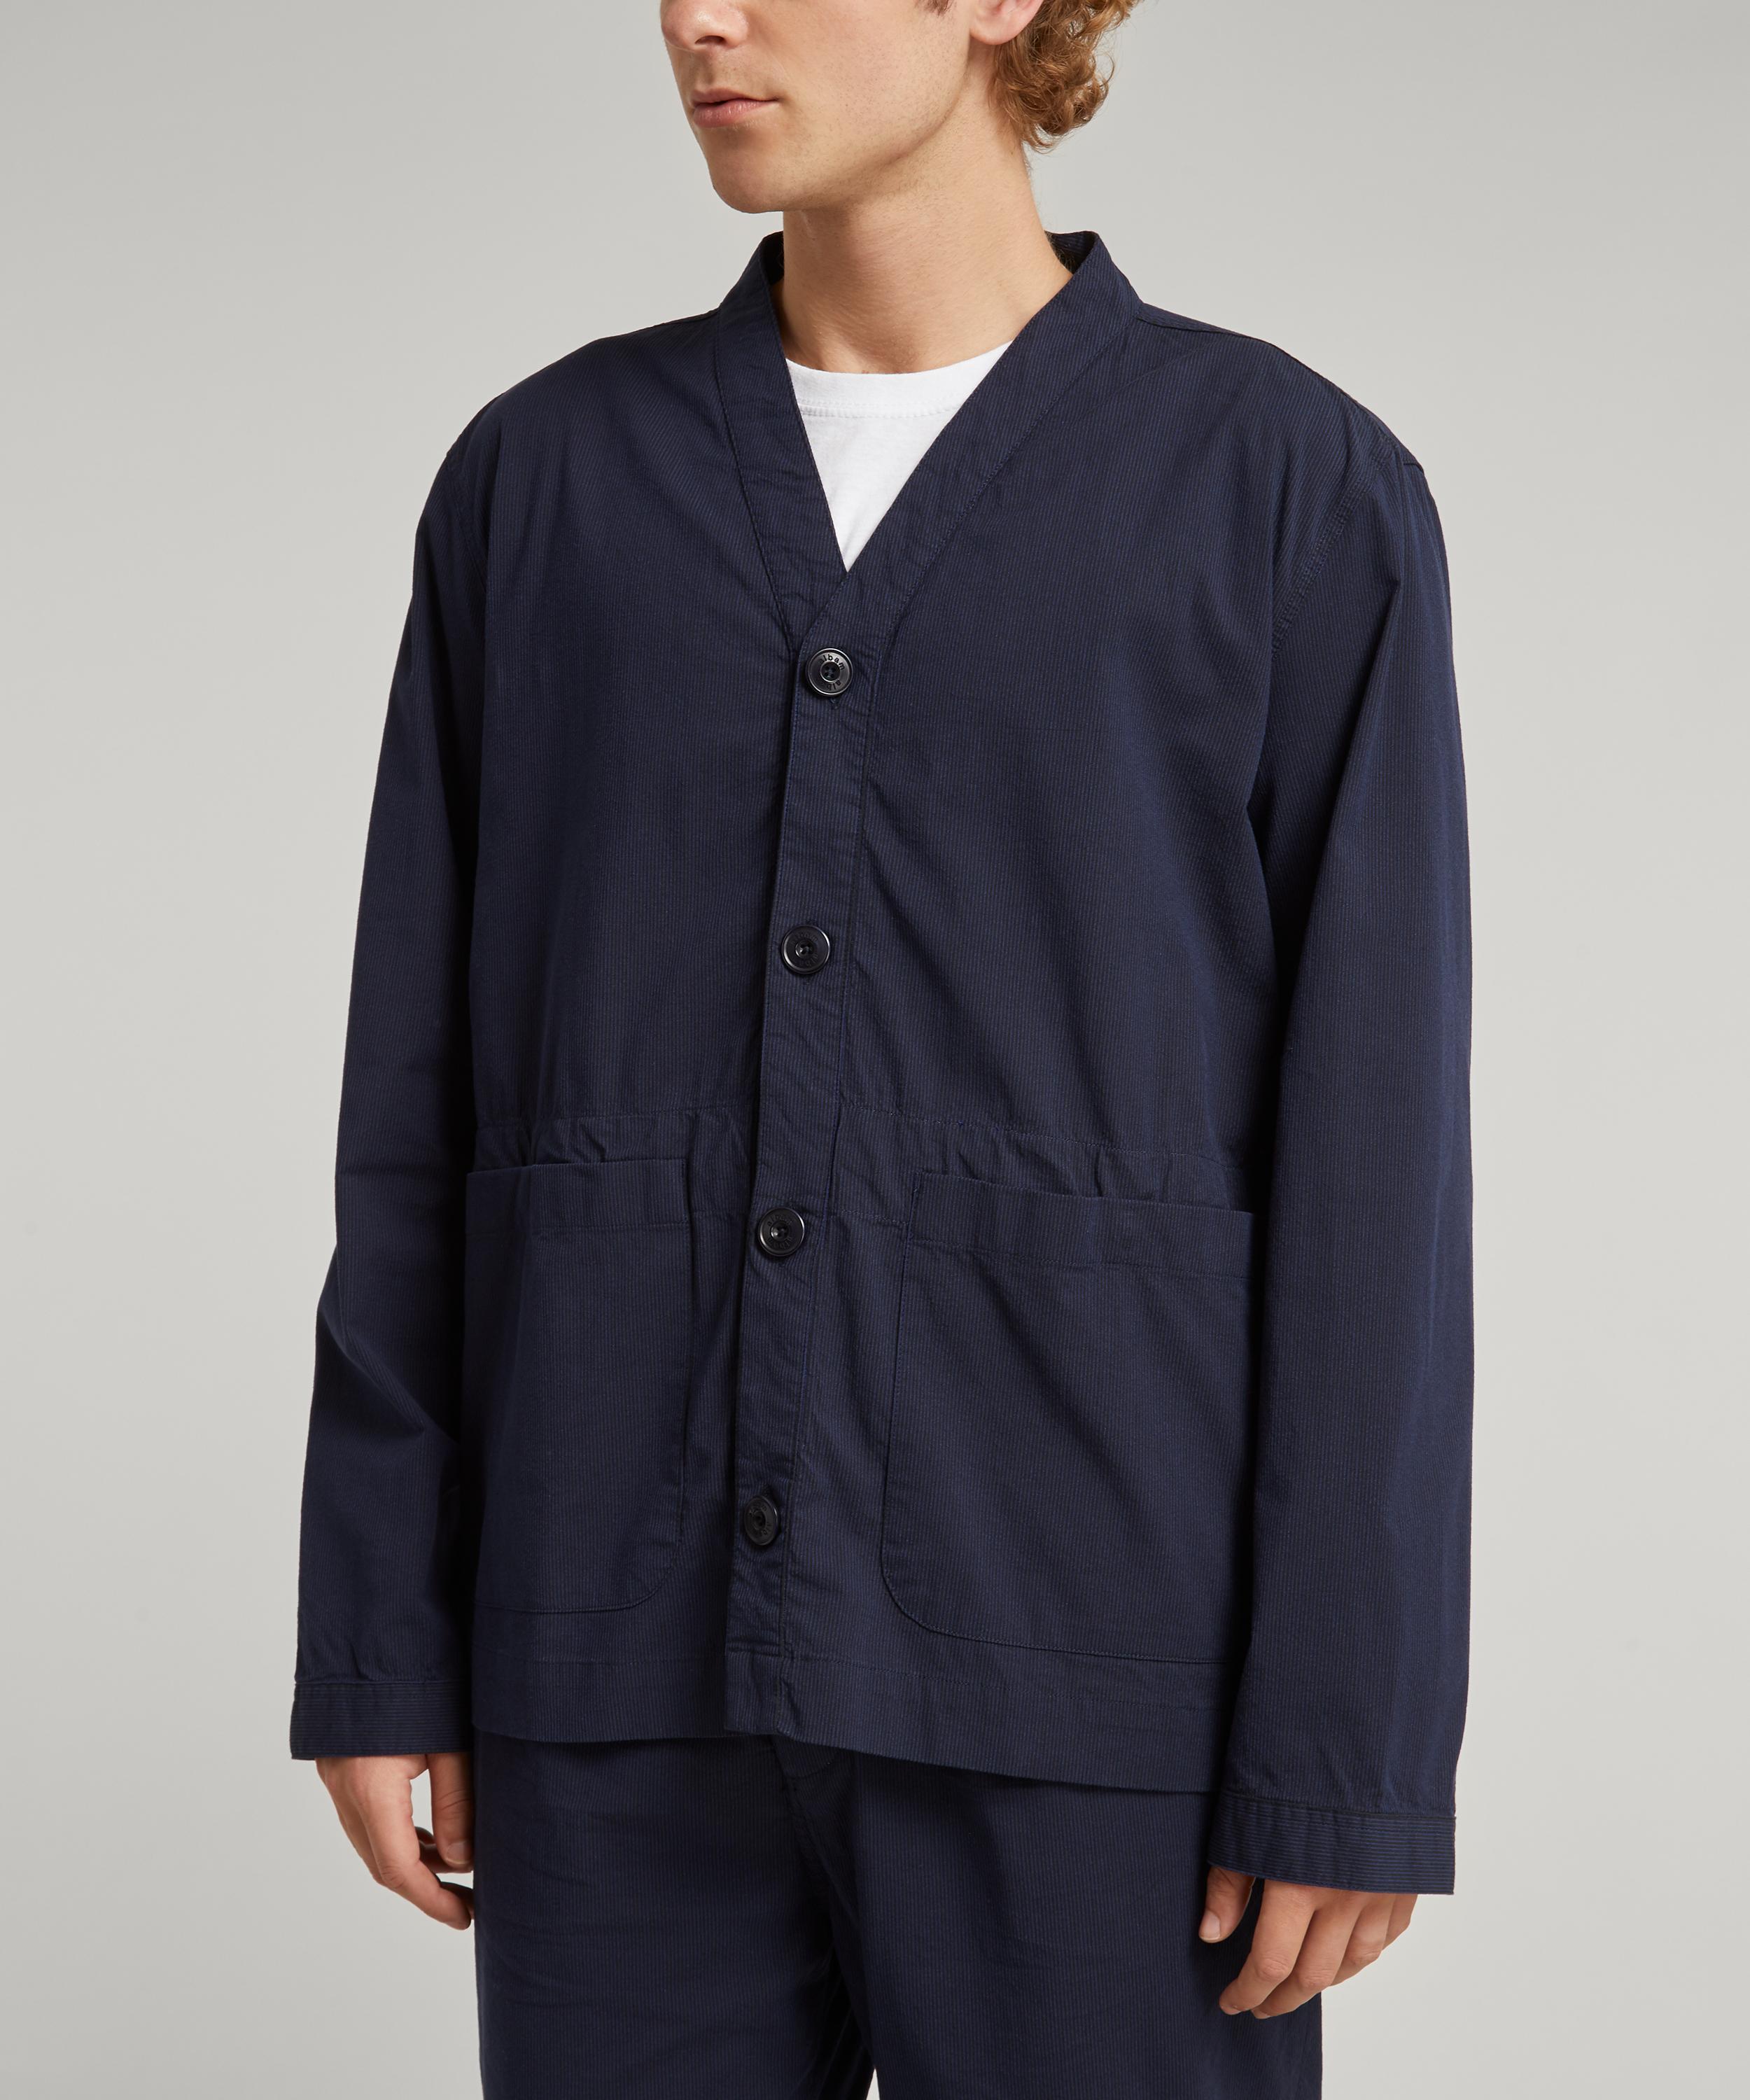 Albam Cotton Collarless Twill Work Jacket in Blue for Men - Lyst